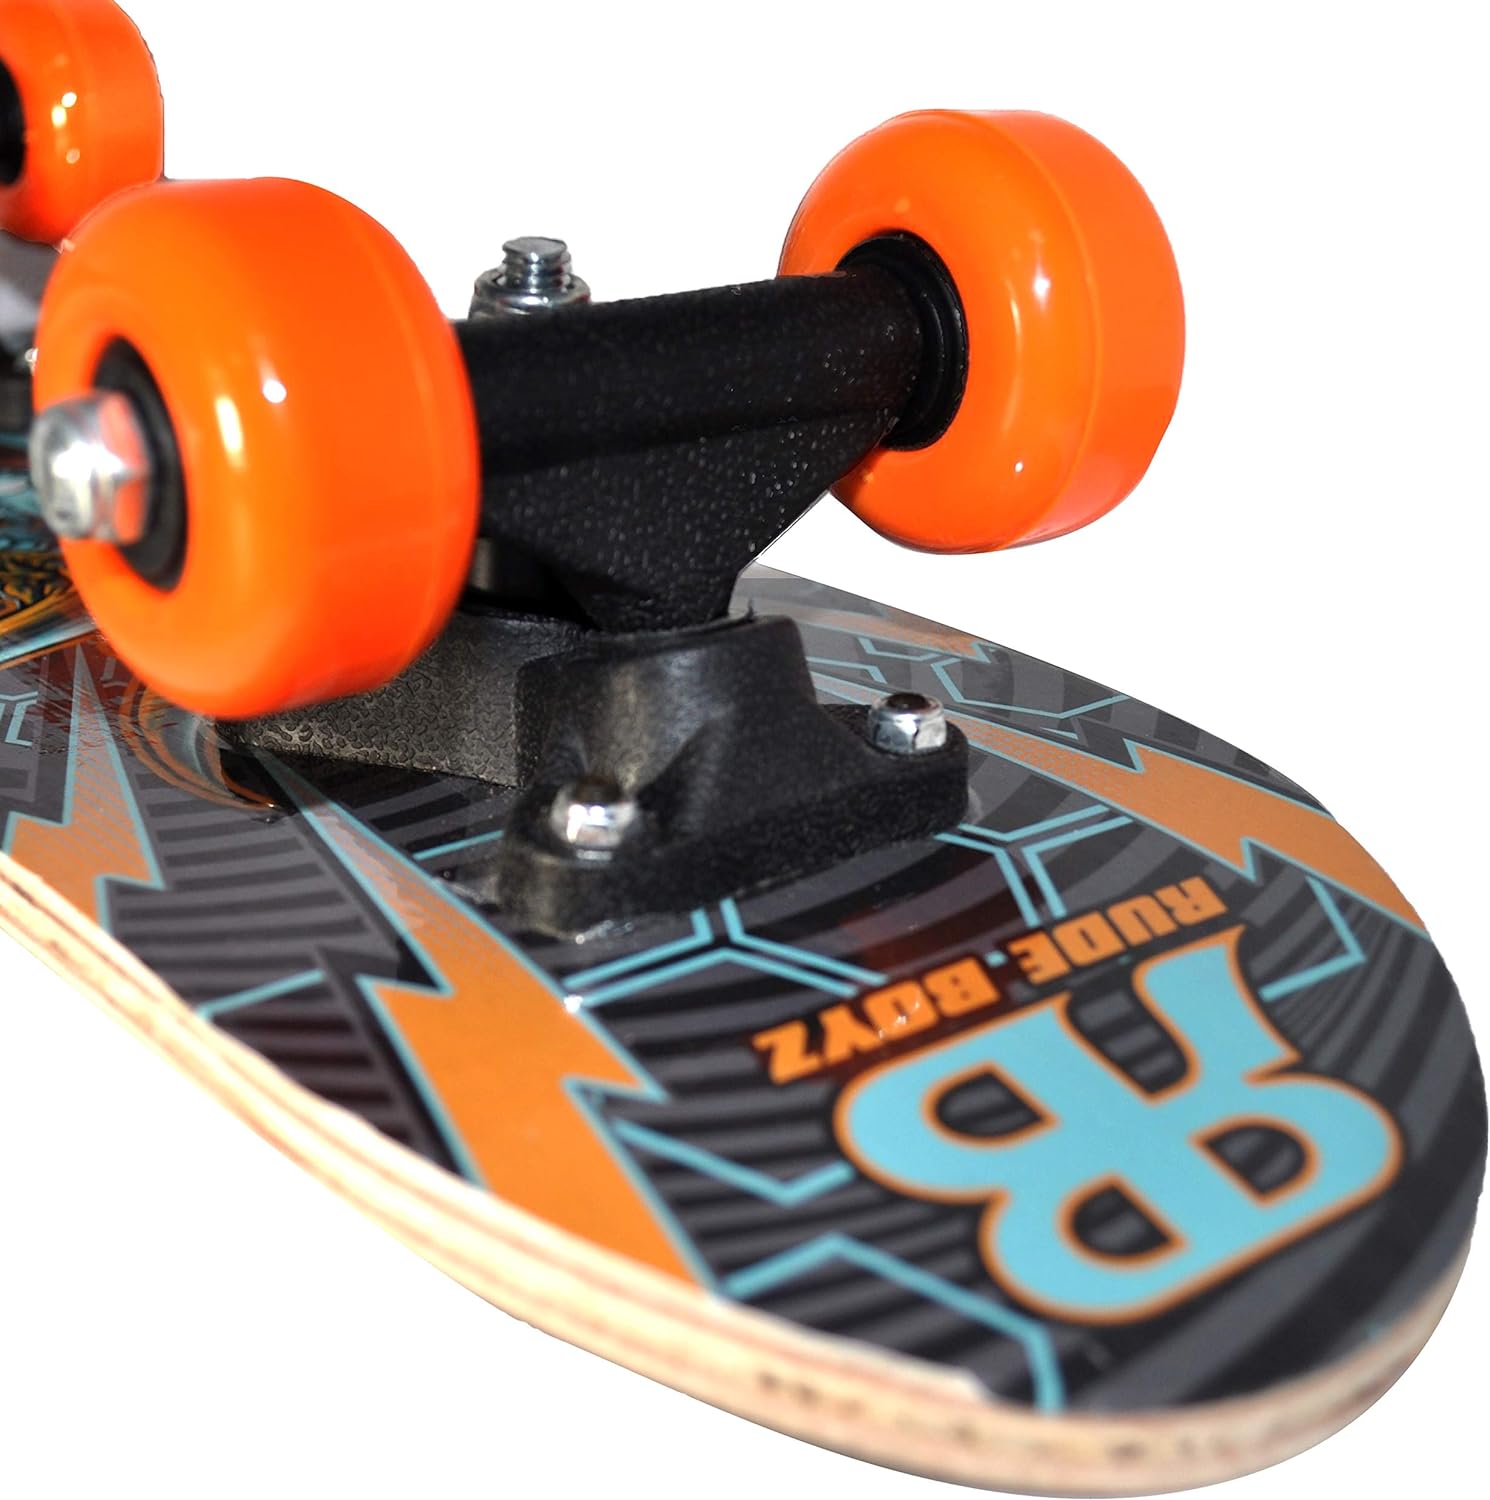 Kids Beginner Skateboard from Rude Boyz - Learn Skateboarding in Style - Mini Wooden Cruiser Board with Cool Graphics for Boys  Girls 3-5 Years - 17” Deck, 54mm Wheels, Lightweight - Safe  Durable